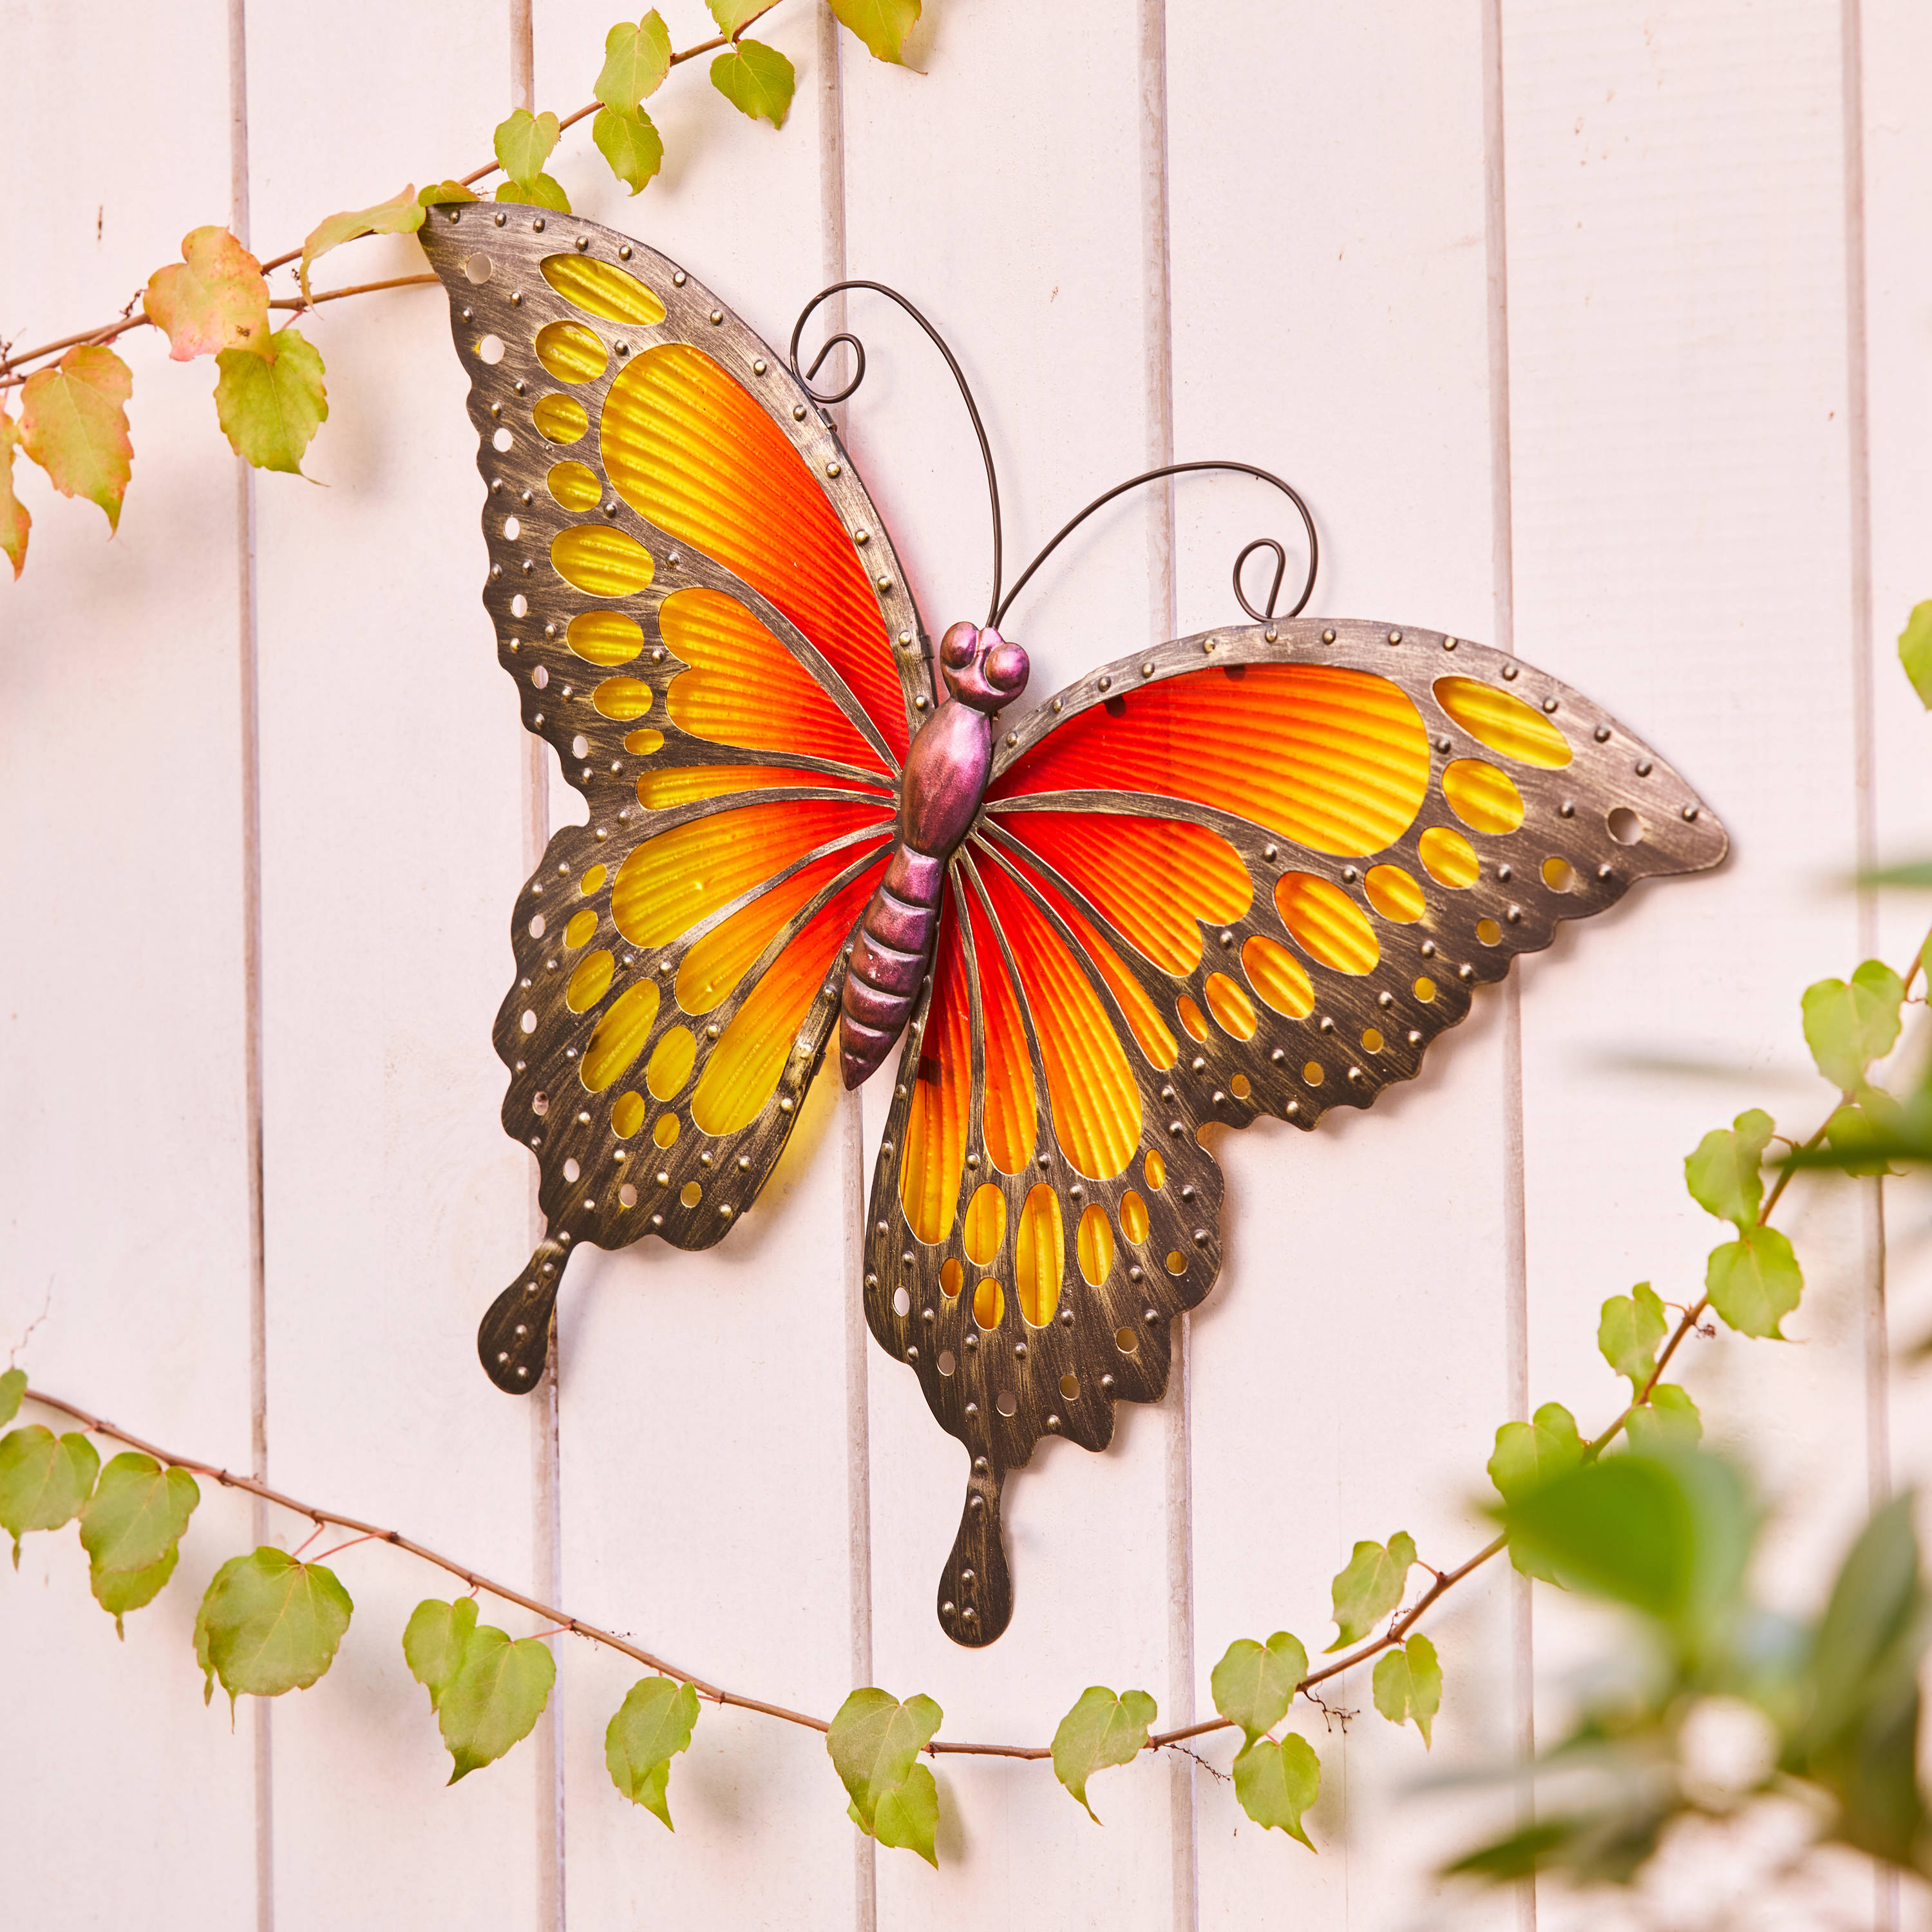 Garden Lawn Yard Decoration Bird Orange Butterfly metal and glass NEW 39" tall 